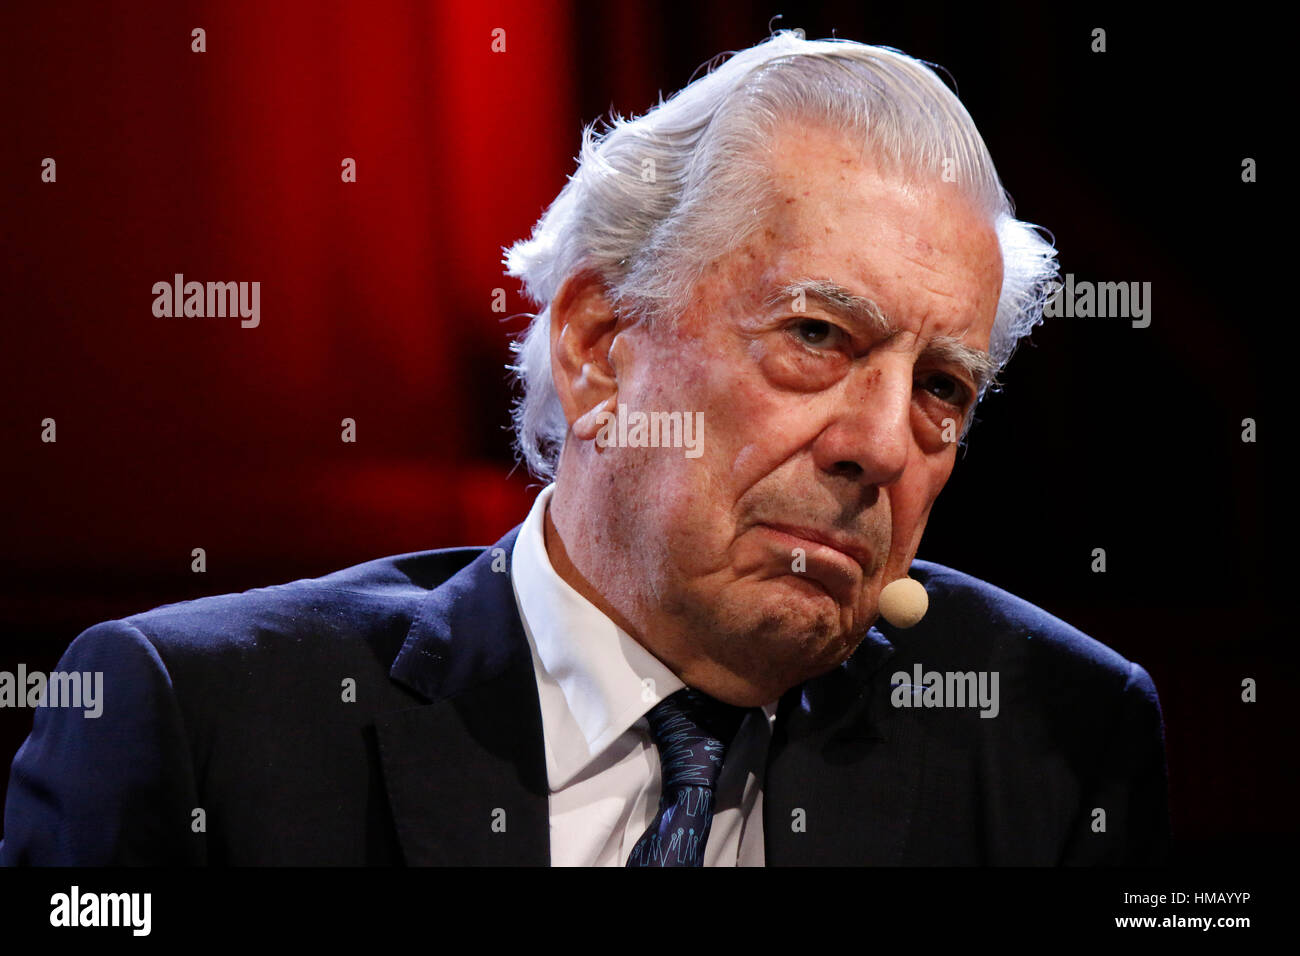 Mario Vargas Llosa - Lesung des romanos 'Die Enthuellung', Gorsser Sendesaal RBB, 26. Oktober 2016, Berlín. Foto de stock